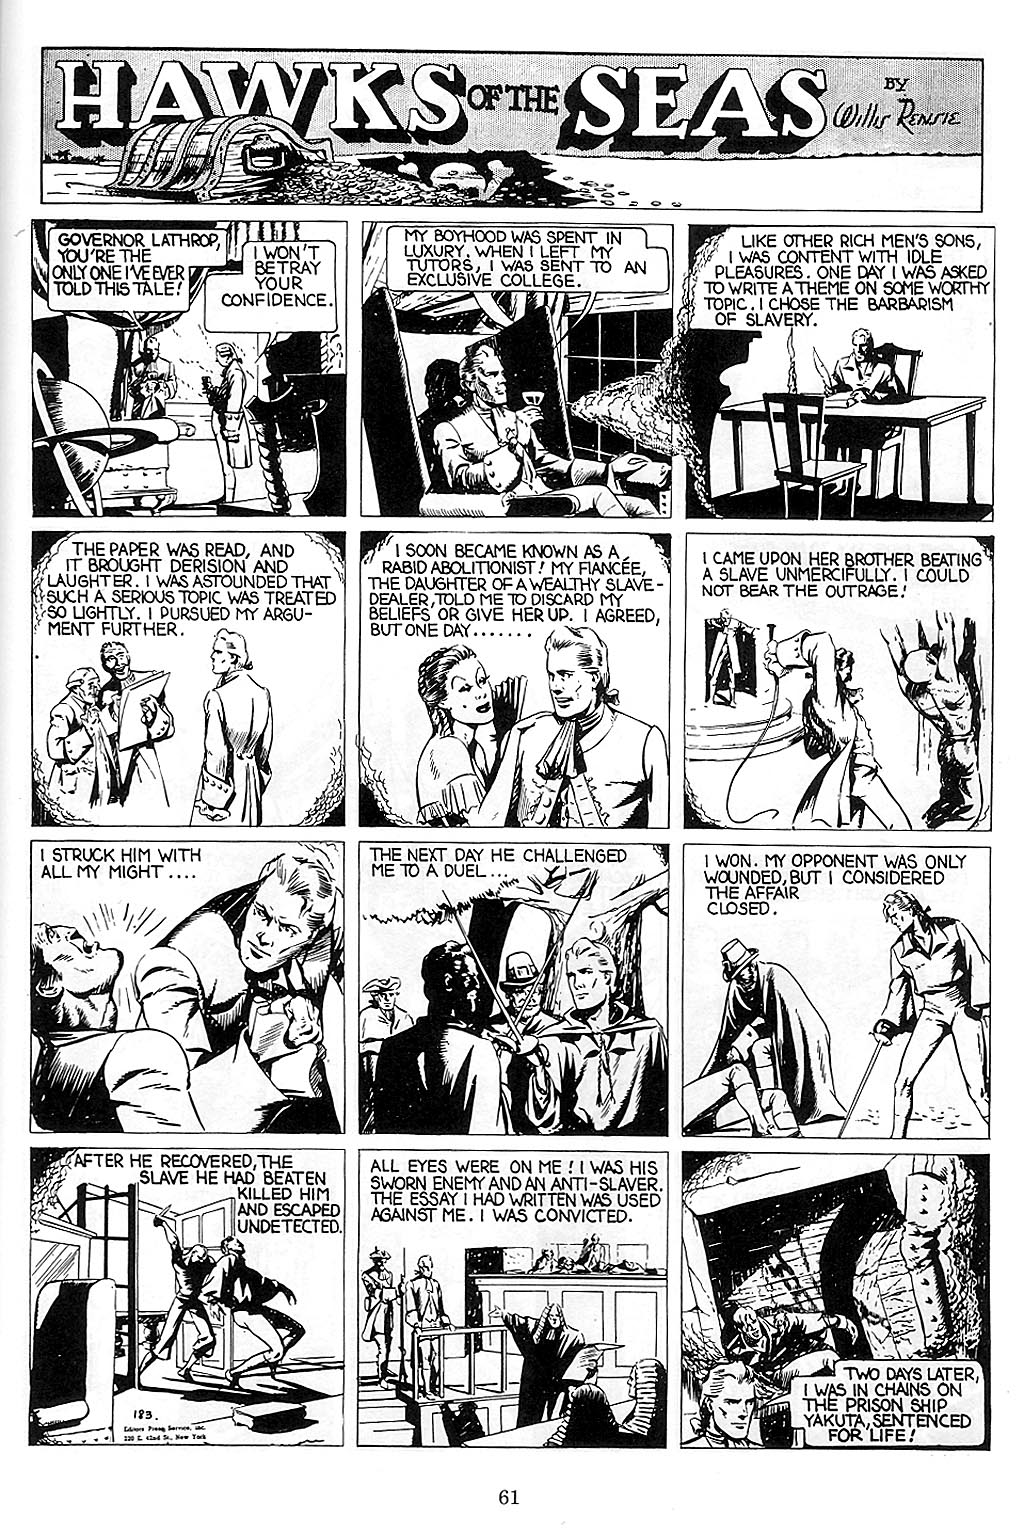 Read online Will Eisner's Hawks of the Seas comic -  Issue # TPB - 62